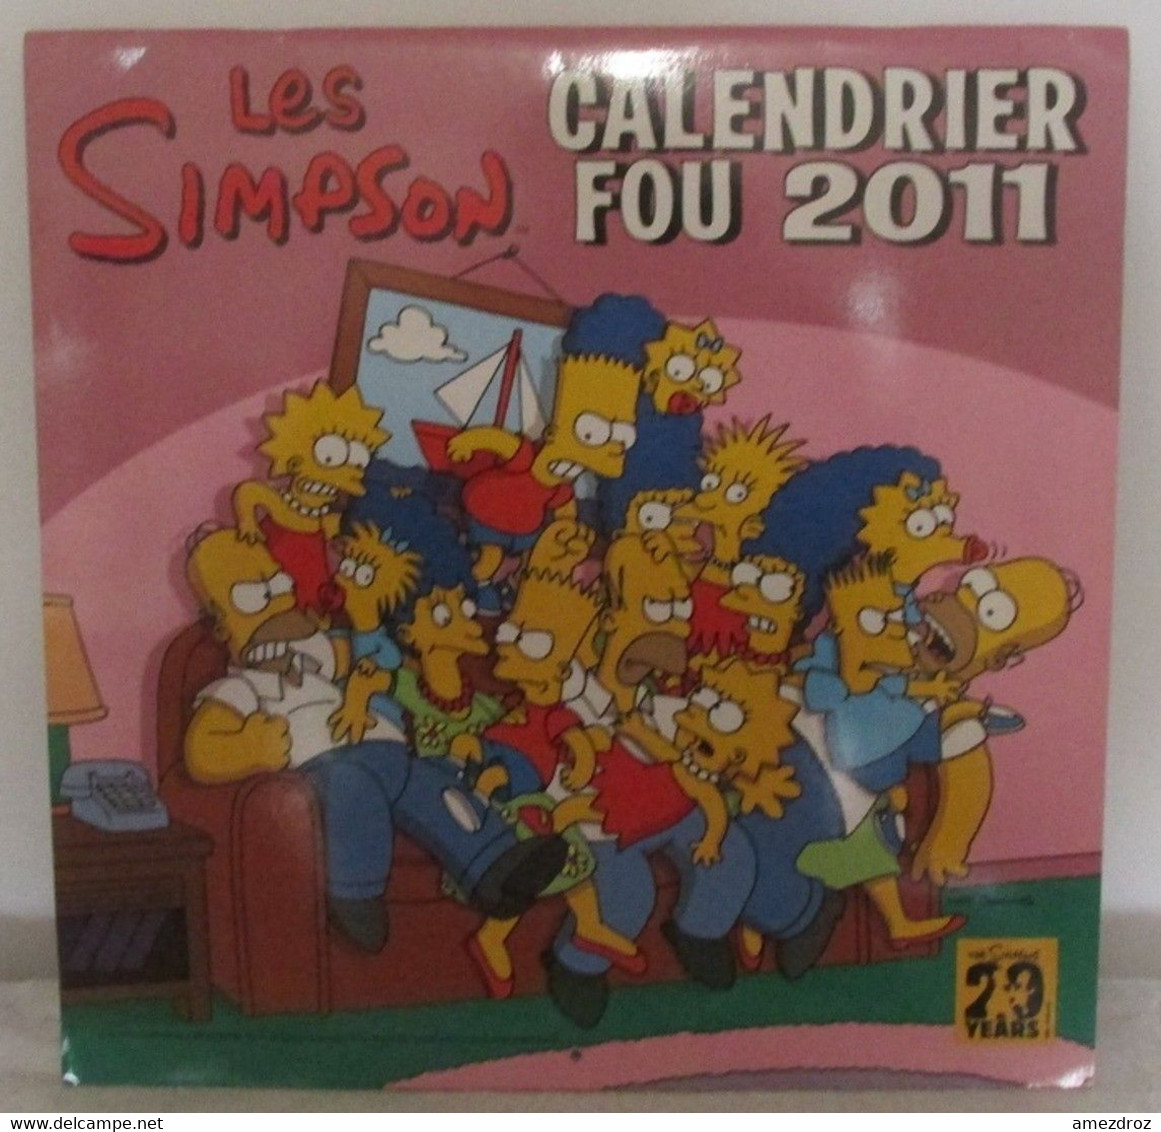 Calendrier fou 2011 Les Simpson, Joyeux 20 ans TTB